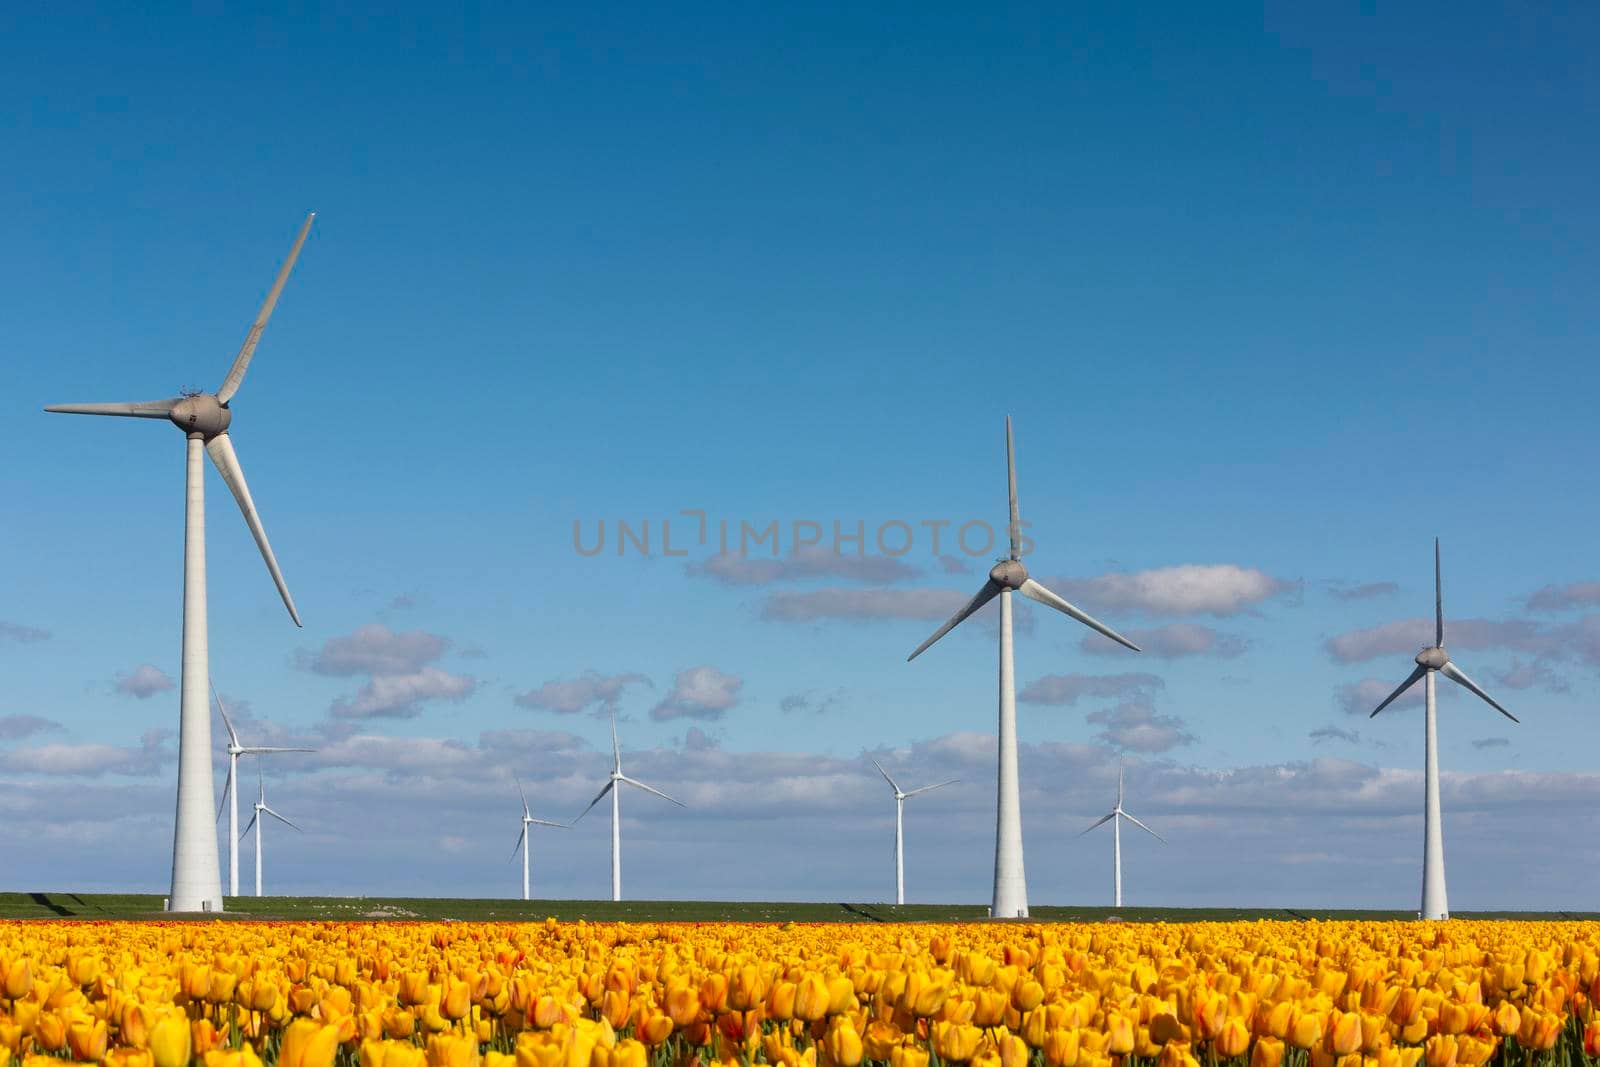 yellow spring tulips and wind turbines under blue sky in dutch part noordoostpolder in holland